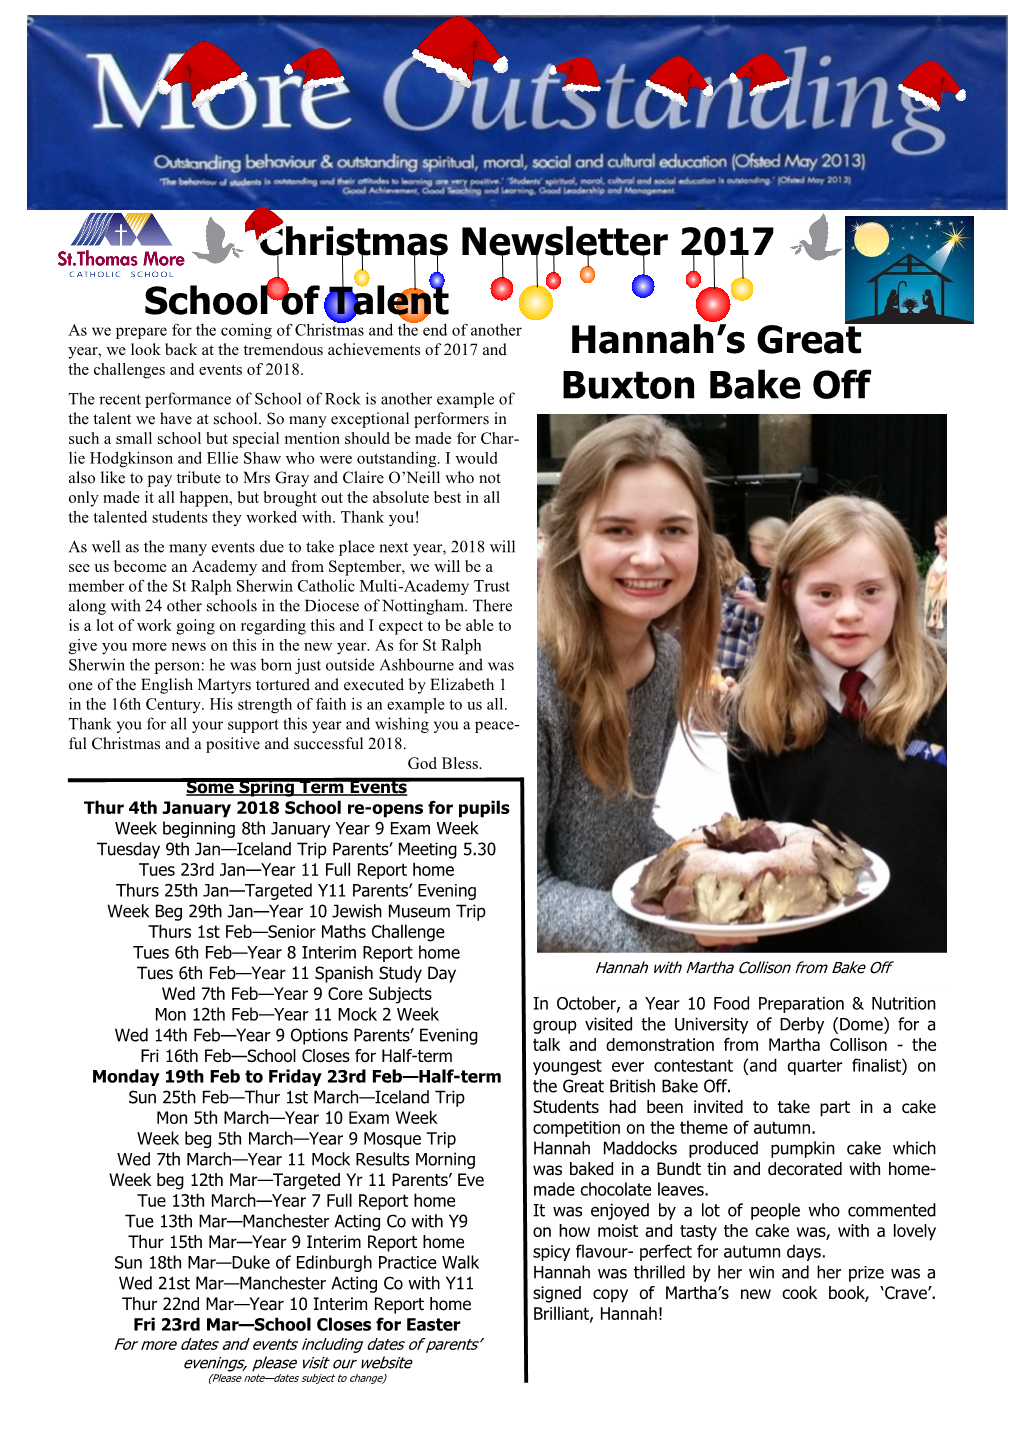 Hannah's Great Buxton Bake